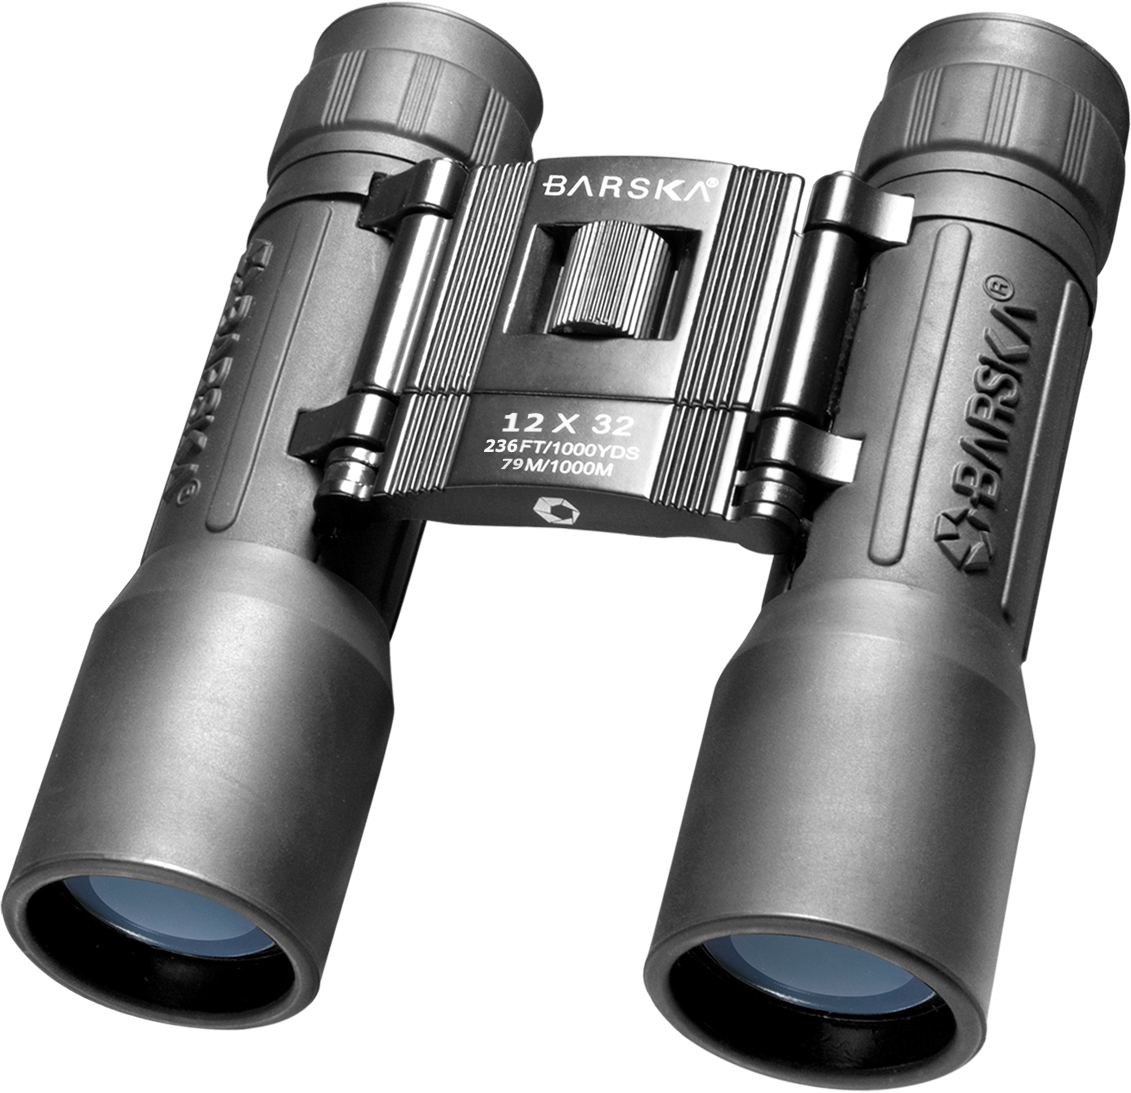 Barska 12x32 Lucid View Binoculars